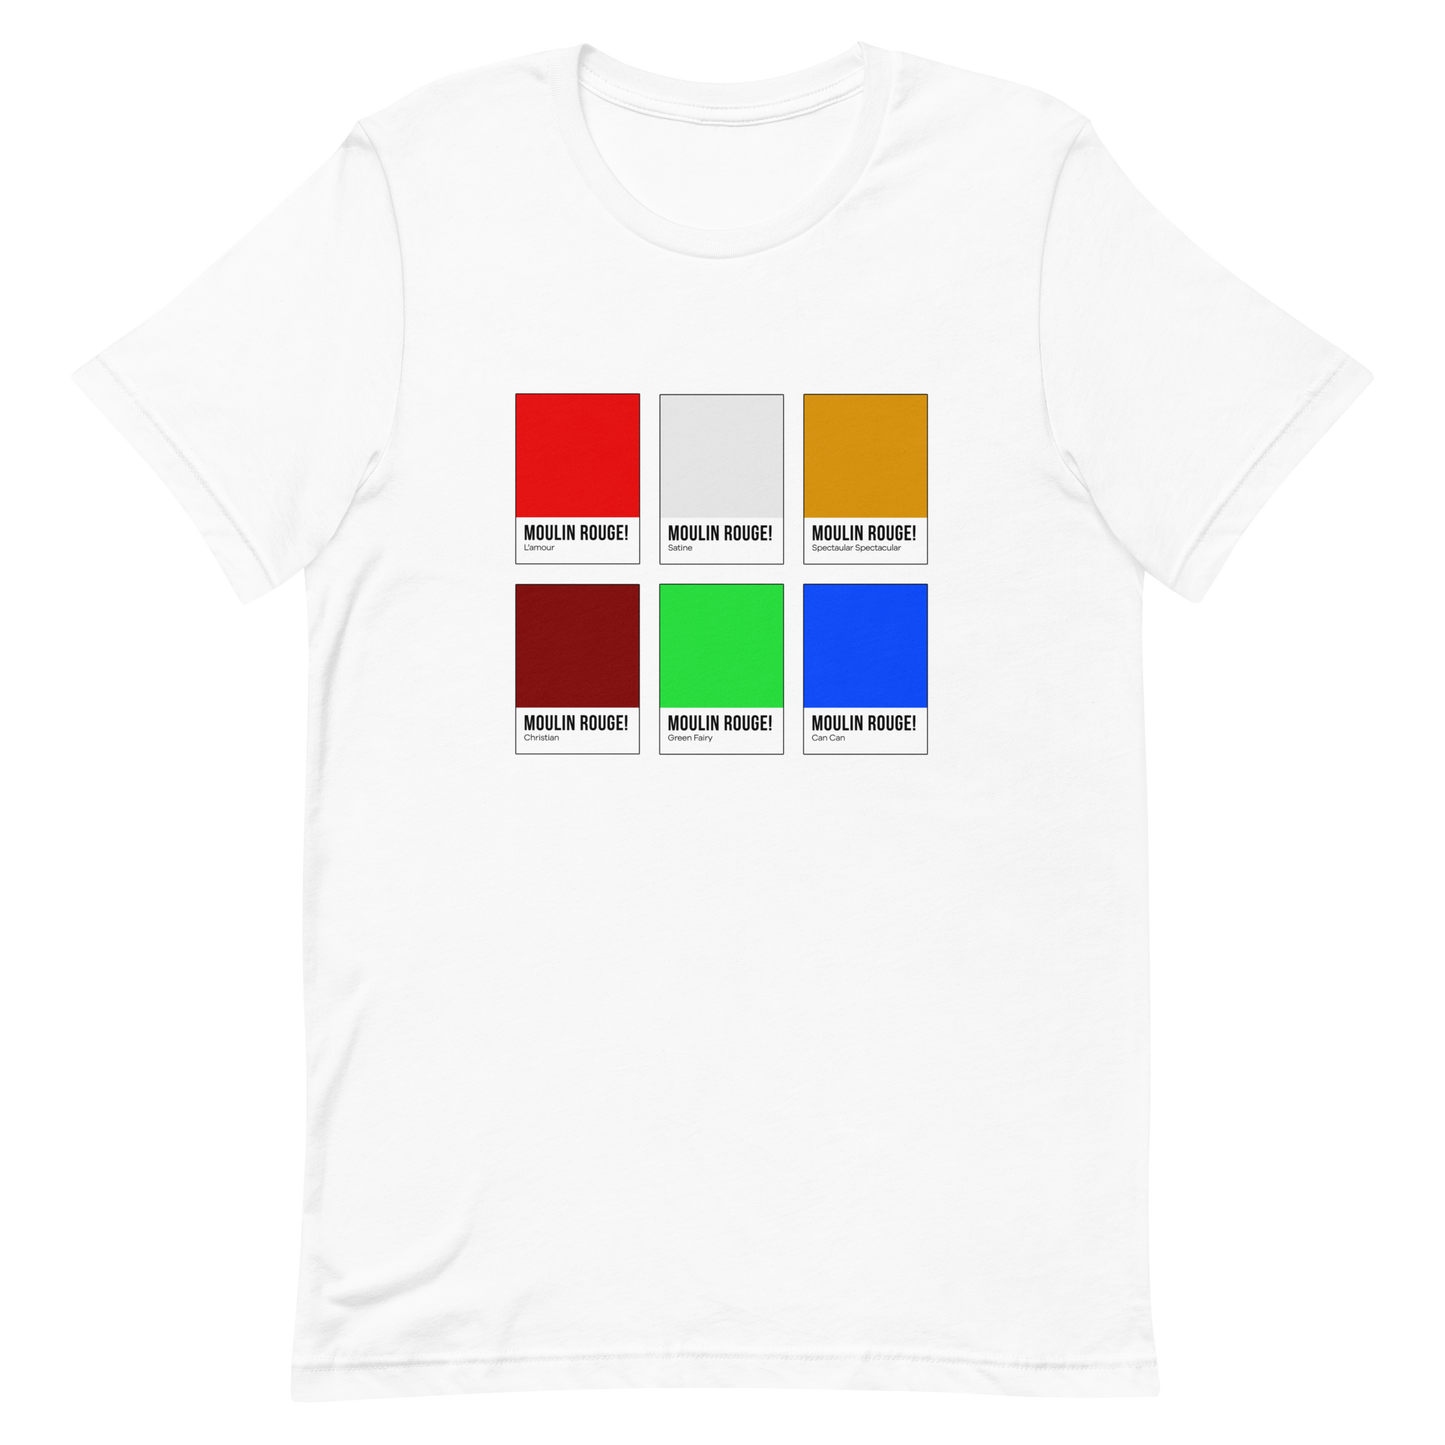 Bohemian Color Chip T-shirt (SAMPLE)